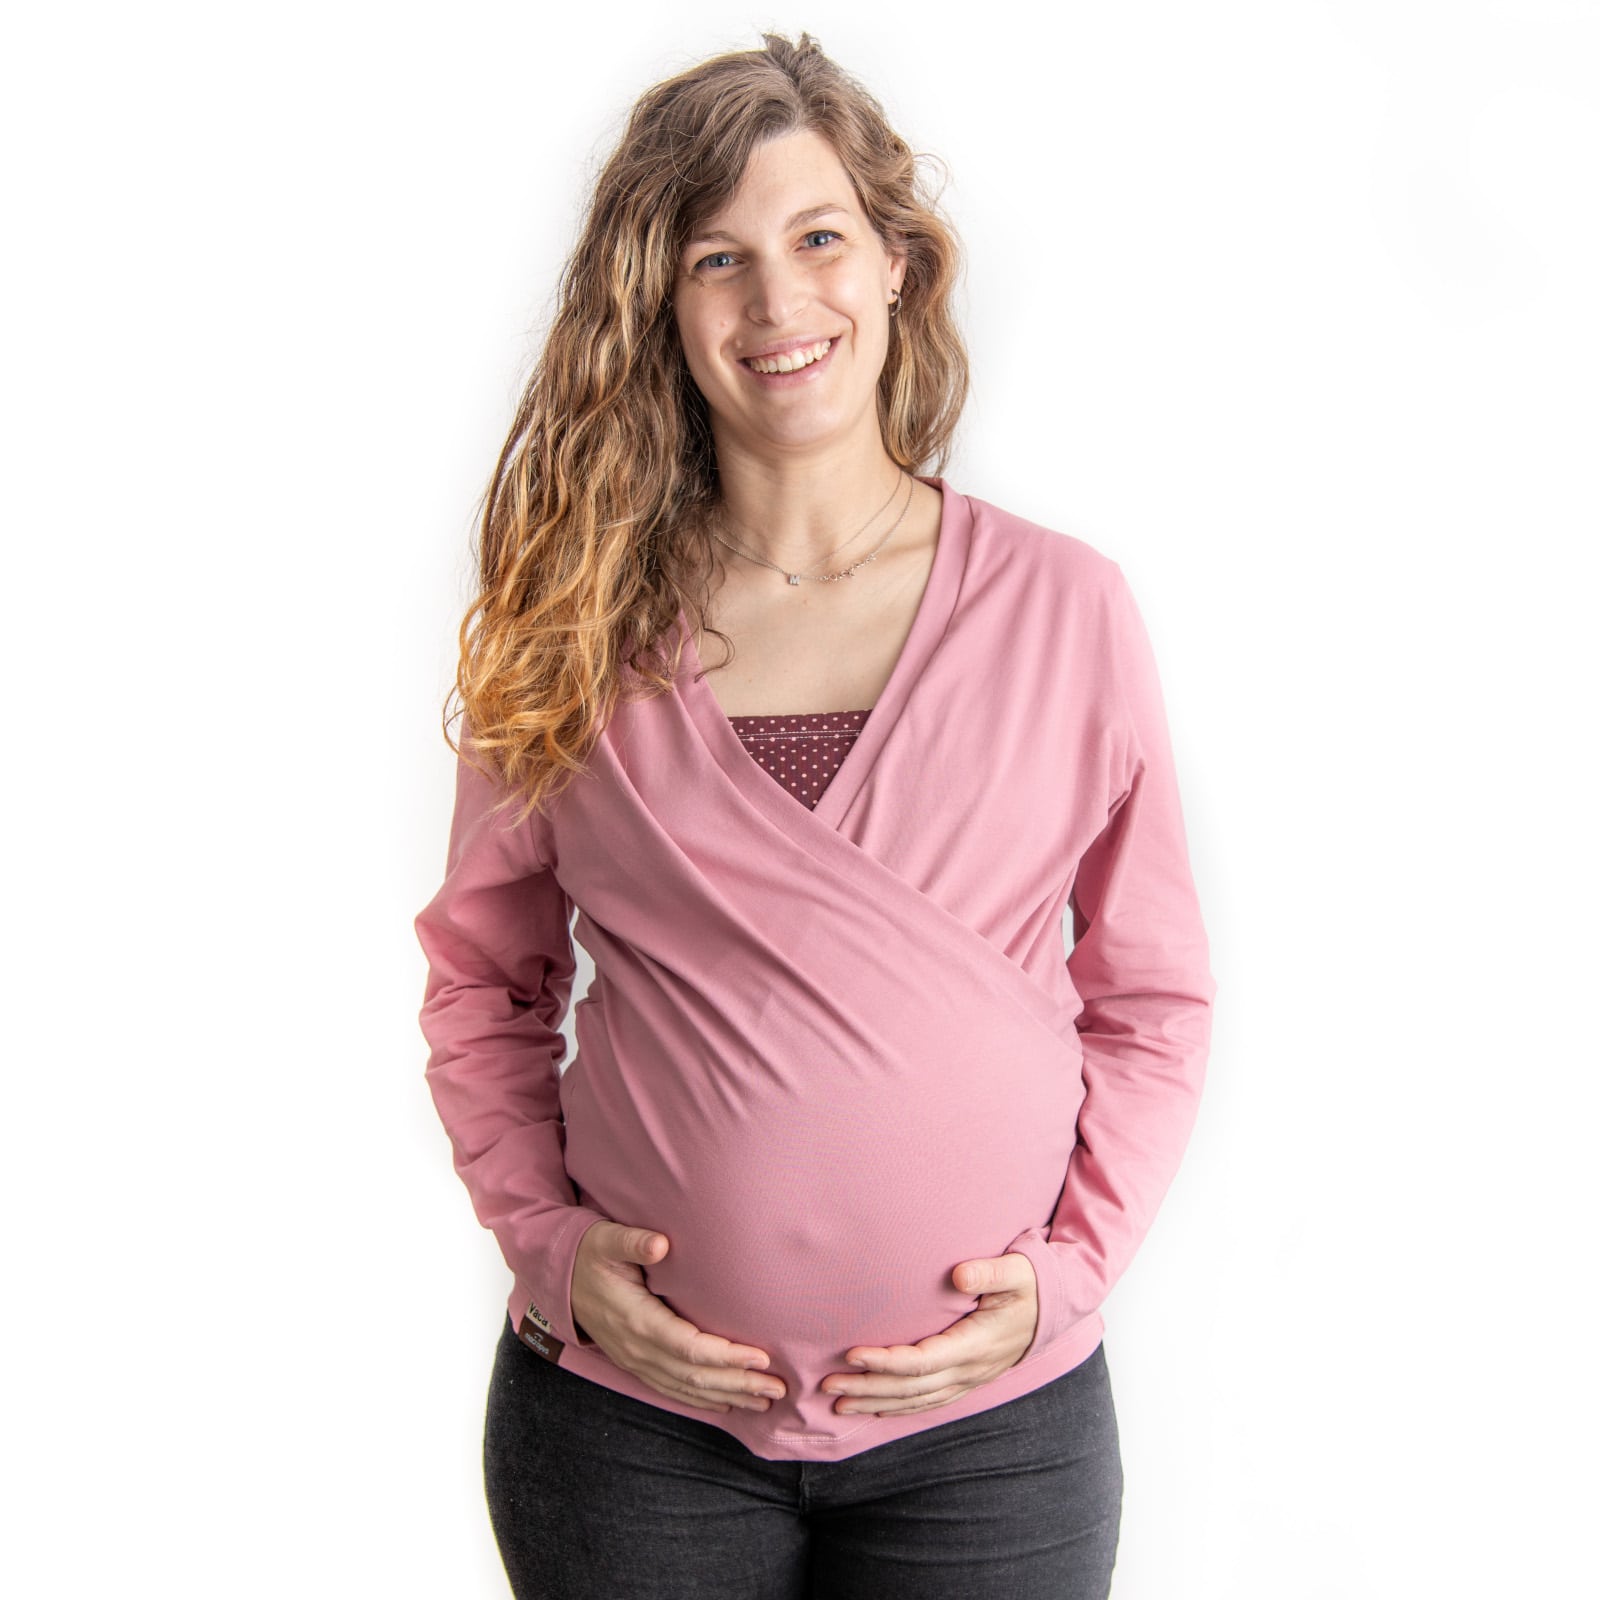 vida Caprichoso doce MA&MA Camiseta de Lactancia y Embarazo - Rosa